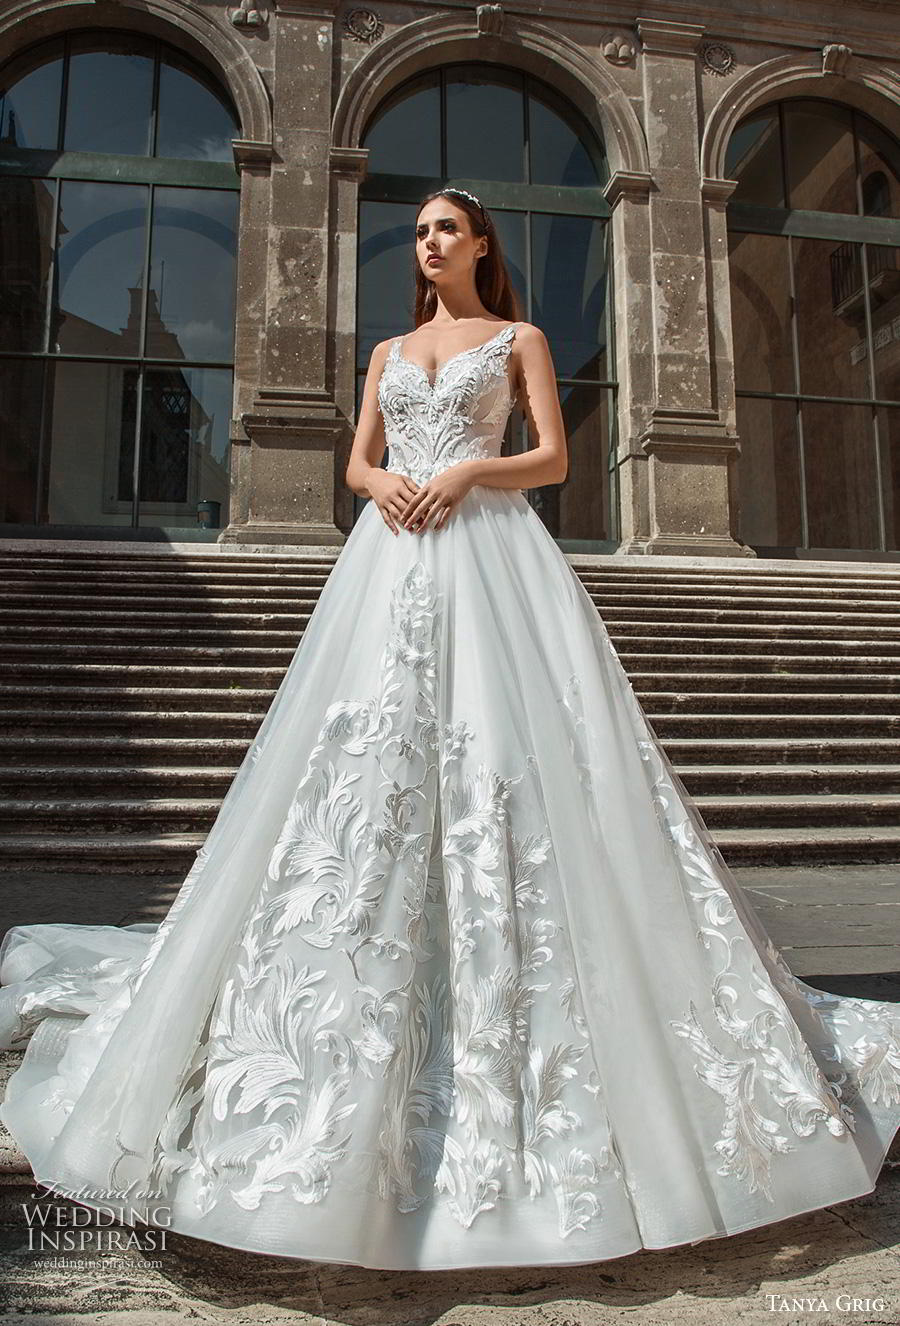 Tanya Grig 2019 Wedding Dresses — “Roman Holiday” Bridal Collection ...